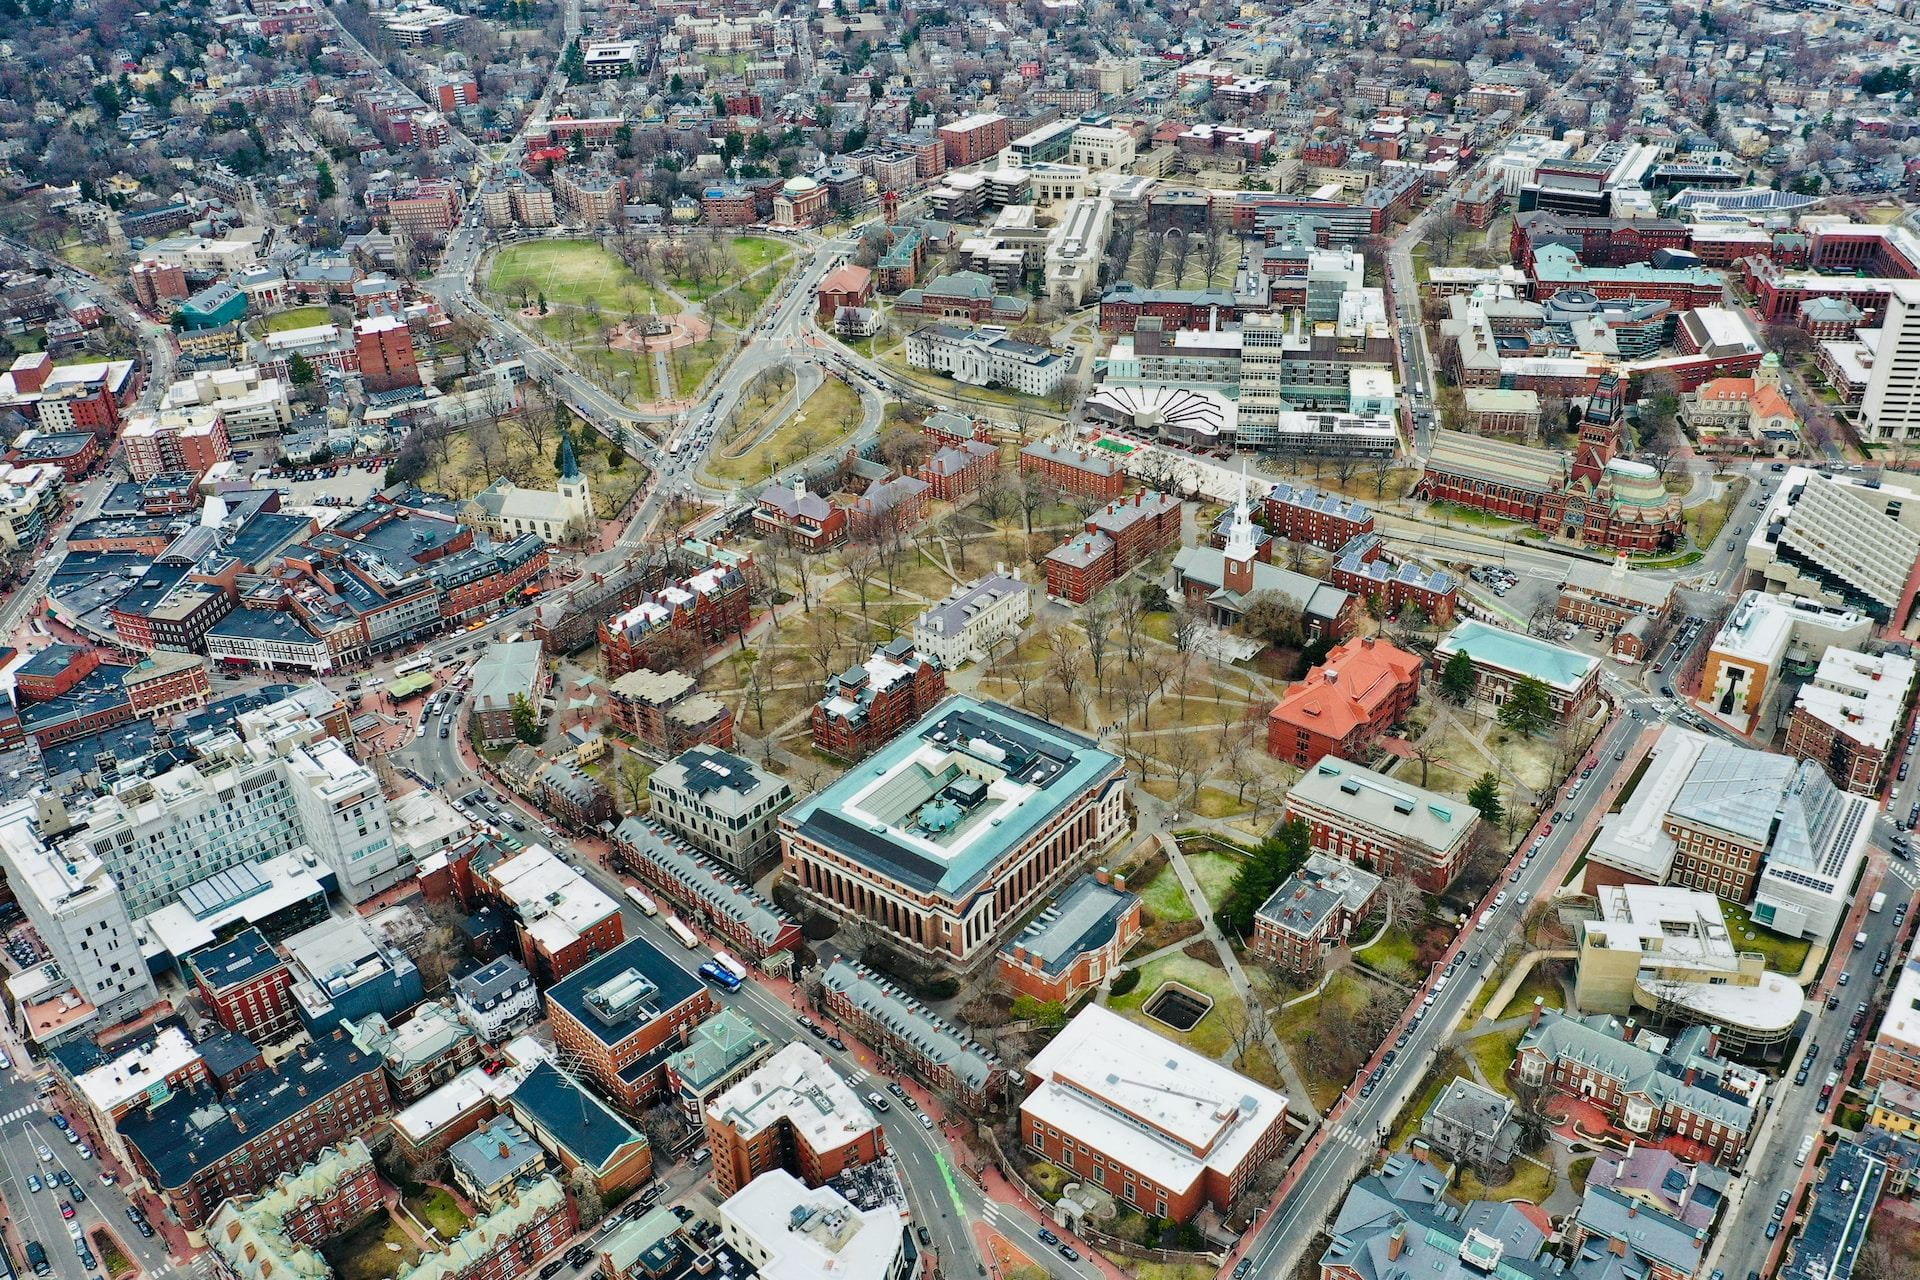 Drone view of Harvard Yard in Cambridge